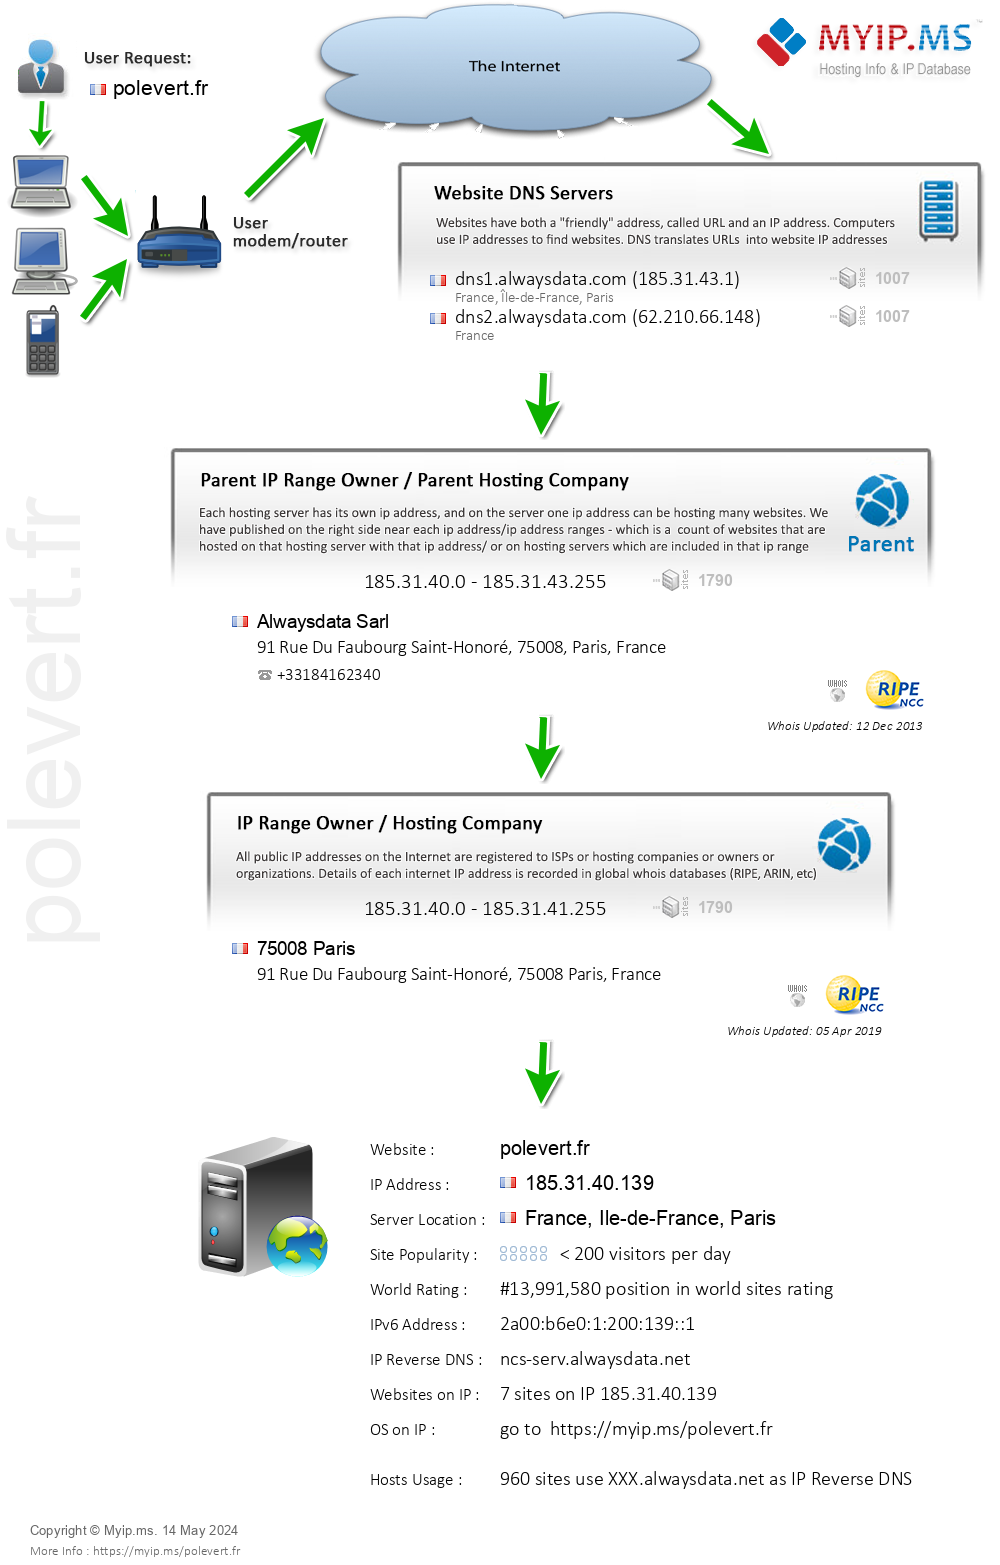 Polevert.fr - Website Hosting Visual IP Diagram